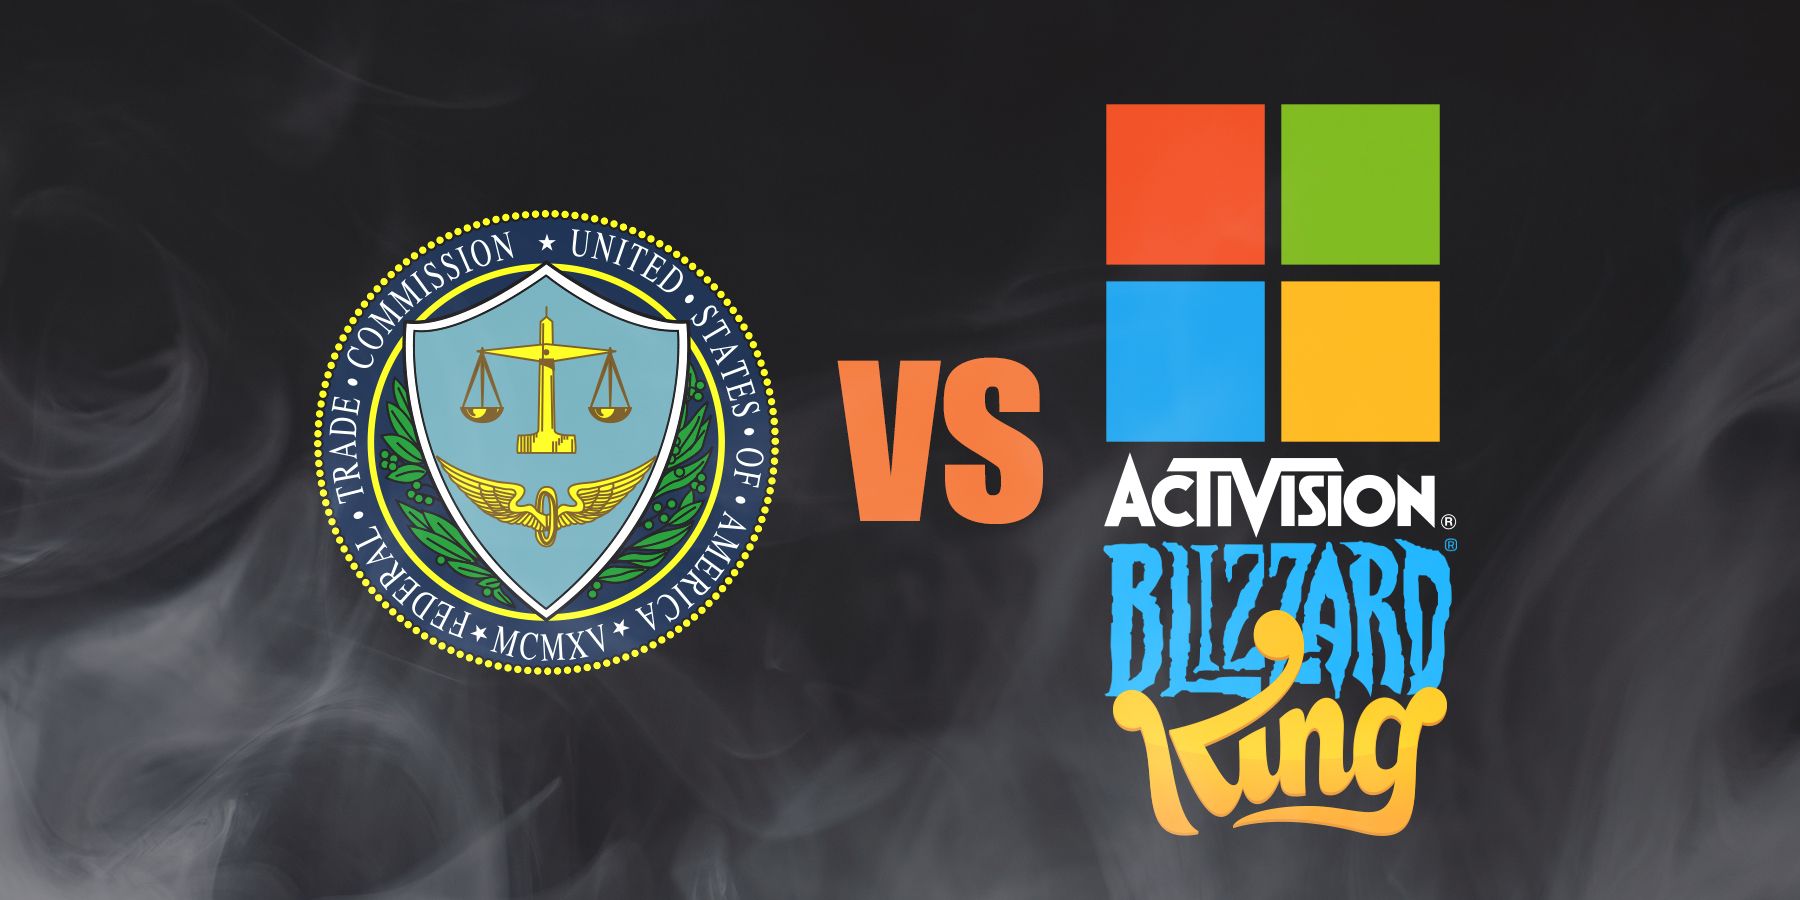 FTC vs Microsoft Activision Blizzard King logos